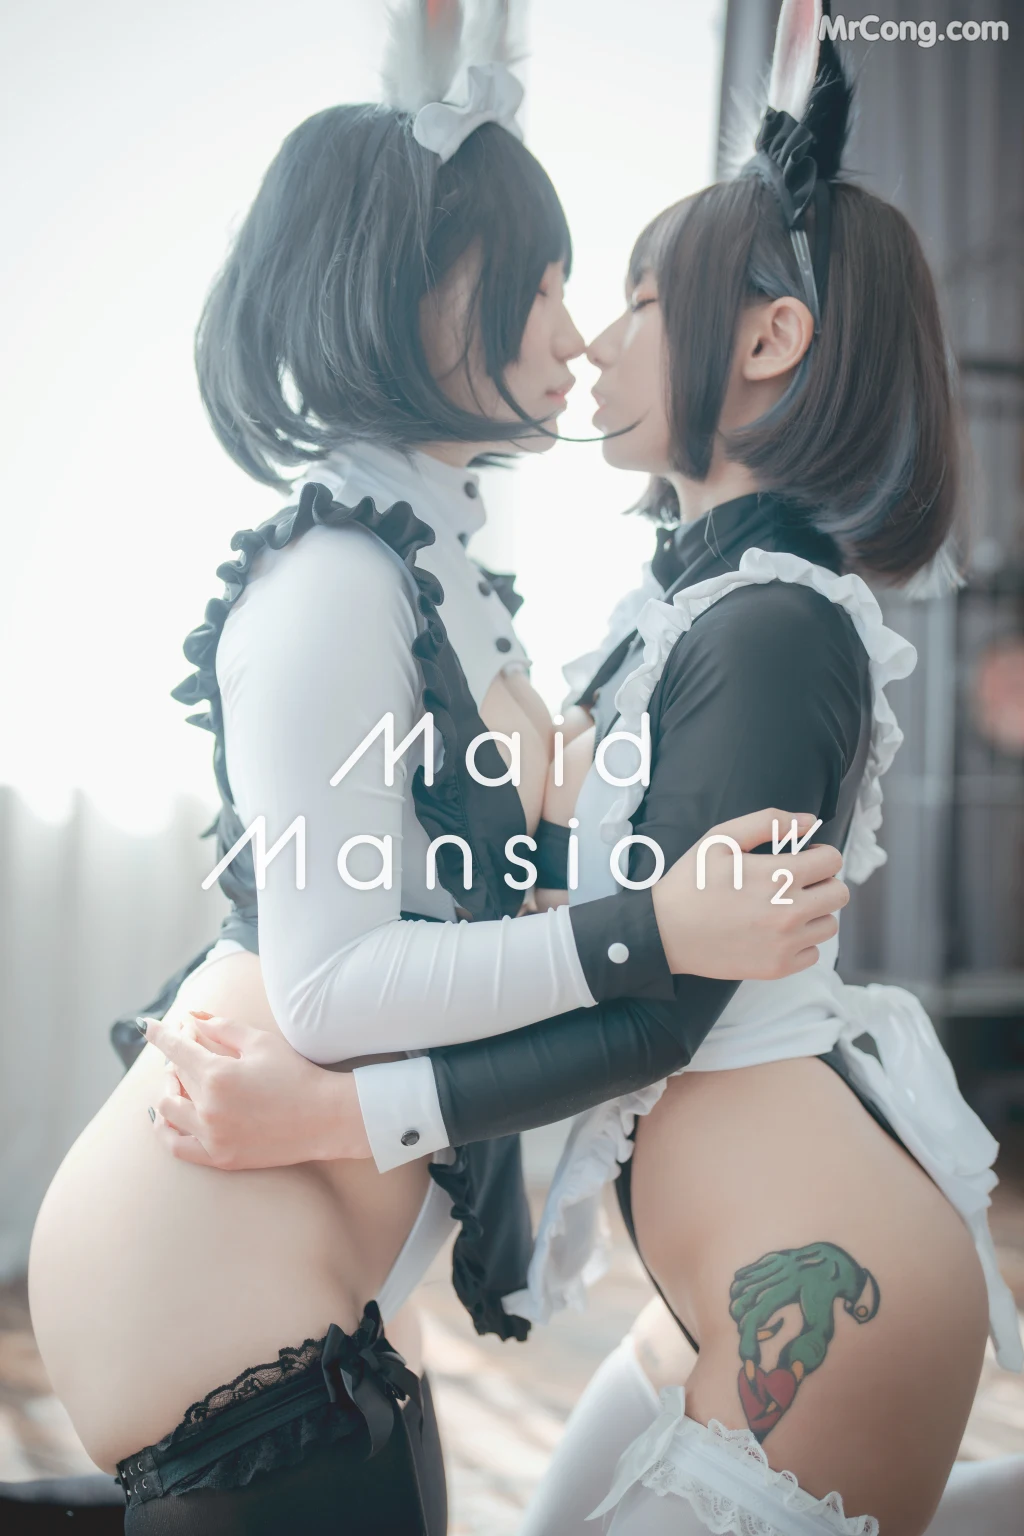 DJAWA Photo - Maruemon (마루에몽) & Mimmi (밈미): "Maid Mansion W²" (Update HQ) (123 photos) photo 7-2